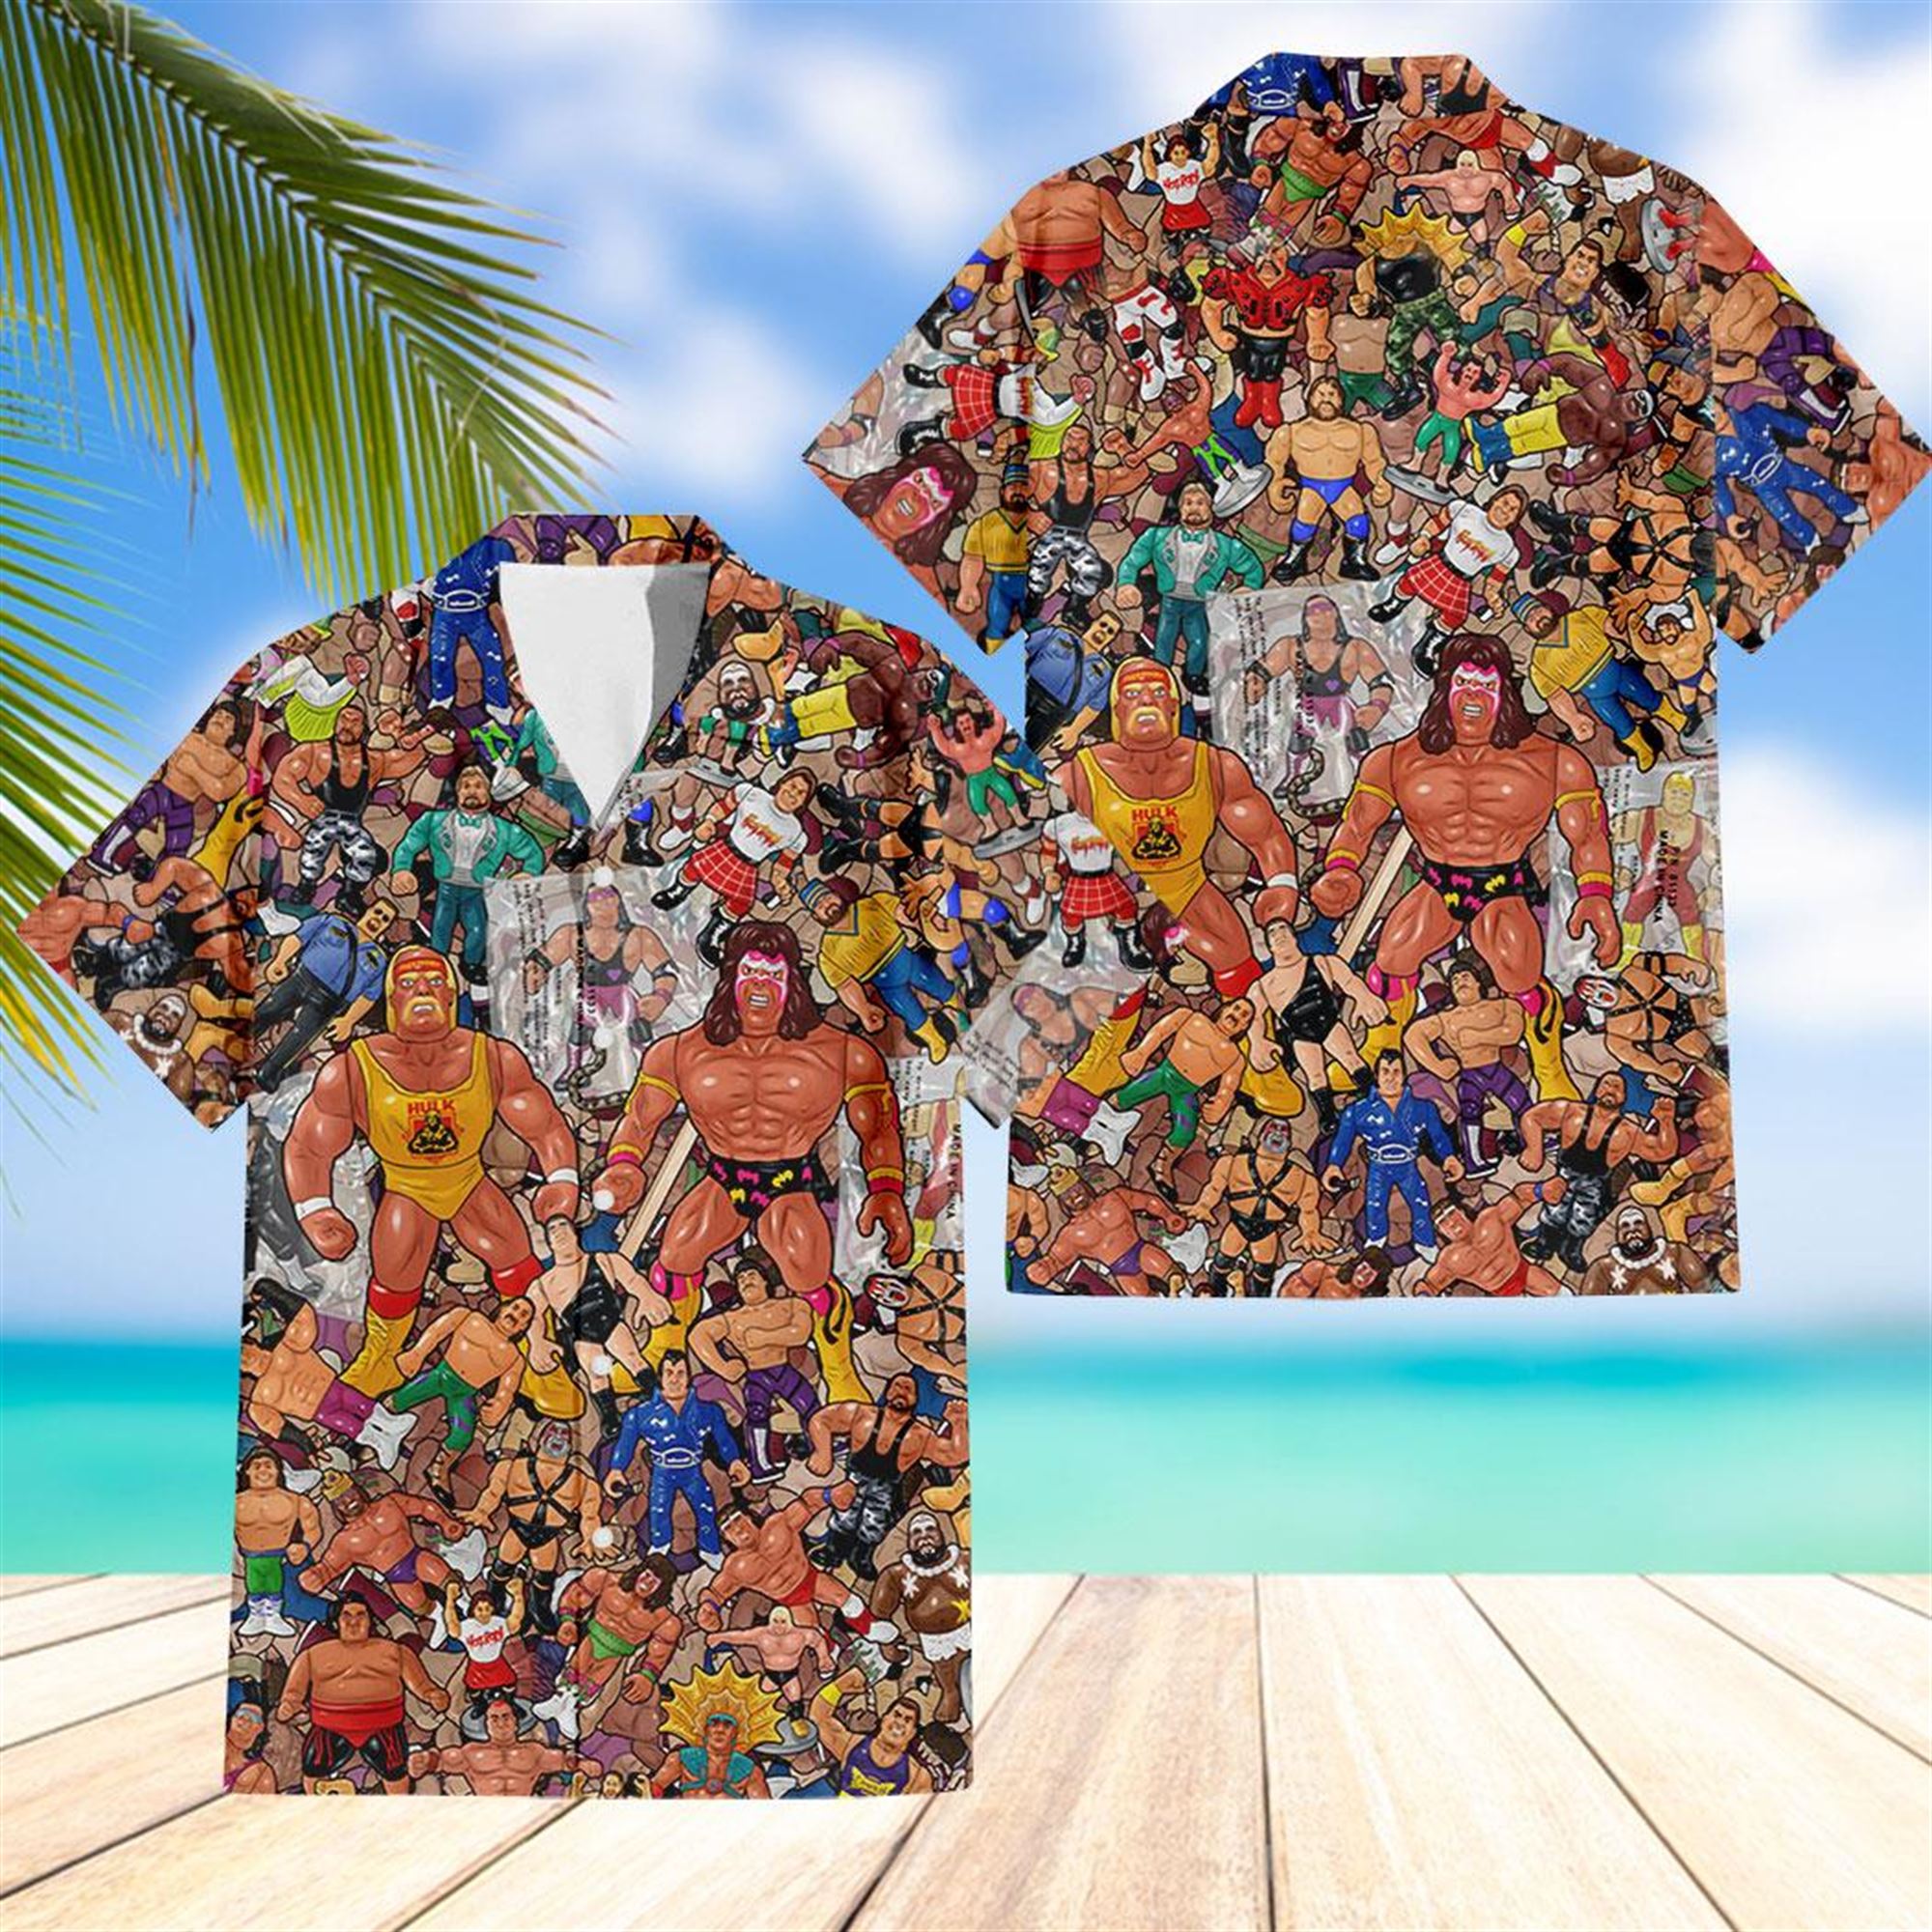 Wonder Woman 1 Facsimile Cover By George Perez Hawaiian Shirt And Shorts